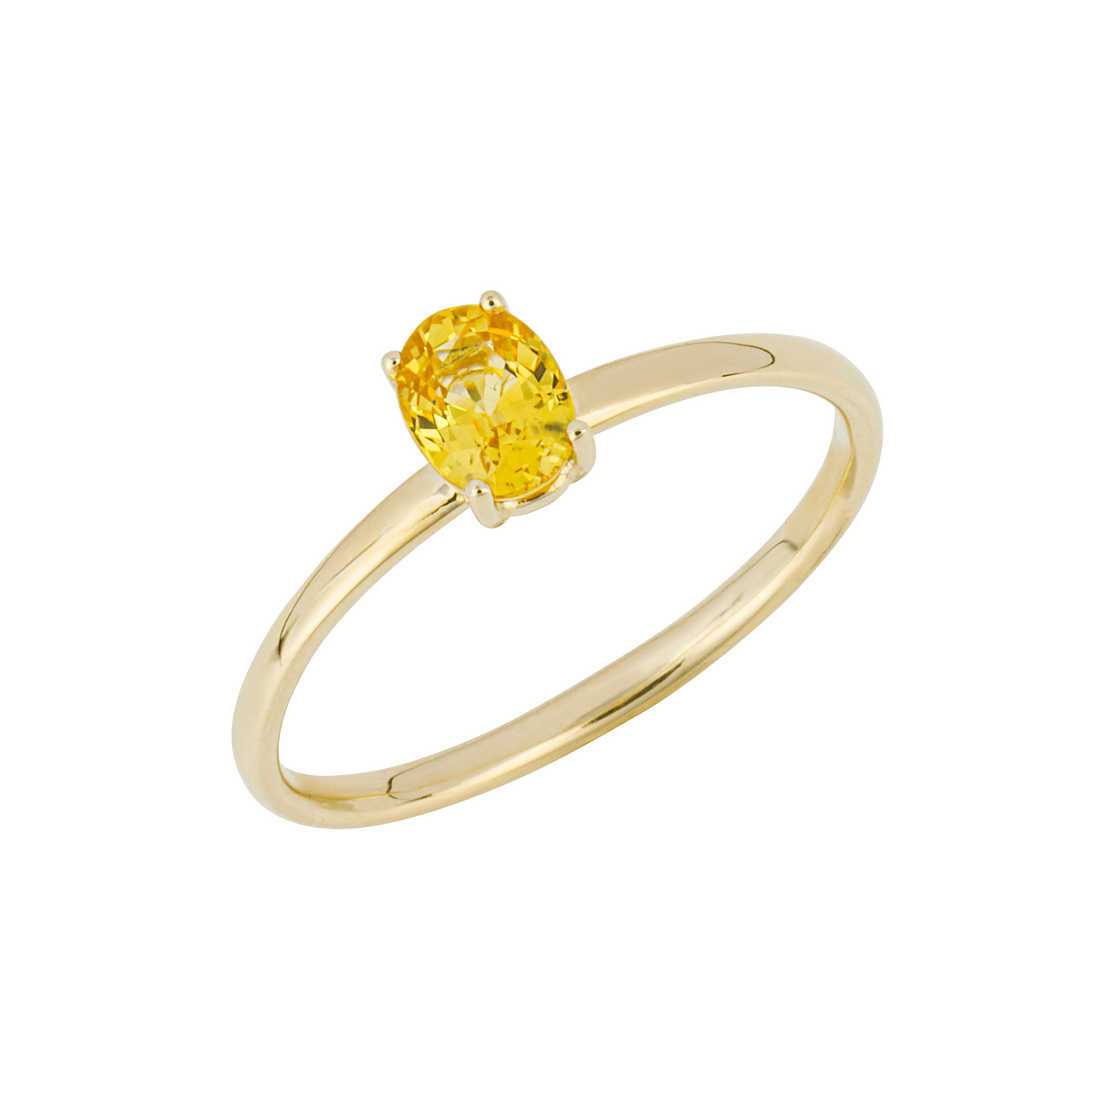 Oval Cut Yellow Sapphire Ring in 9ct Yellow Gold - Robert Anthony Jewellers, Edinburgh